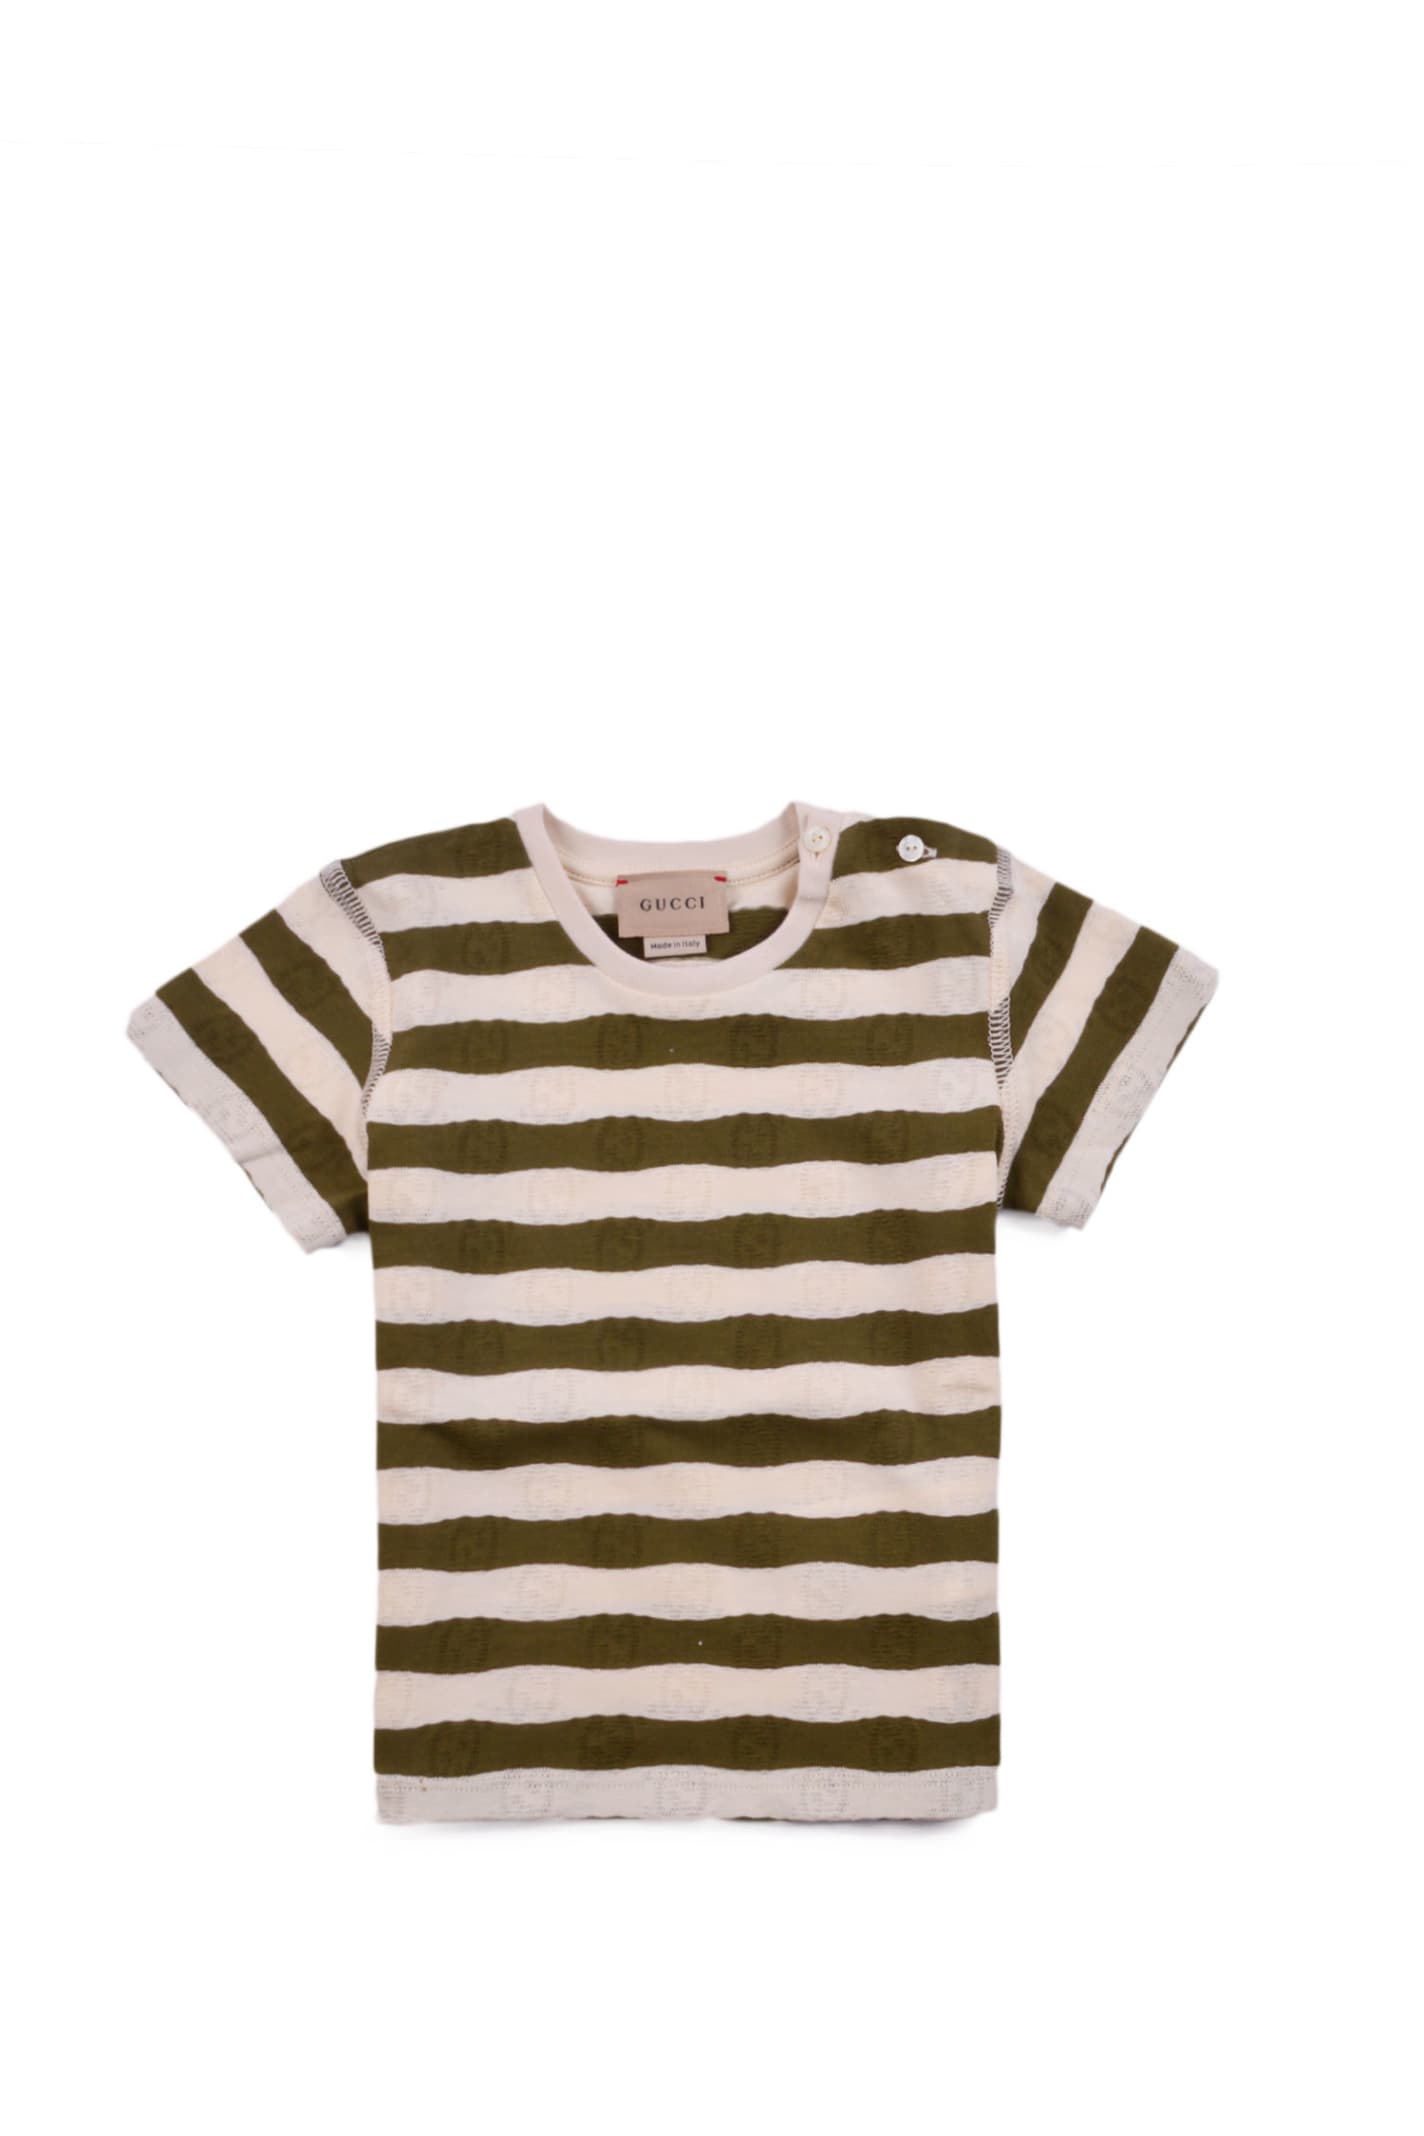 Gucci Striped Gg Cotton T-shirt